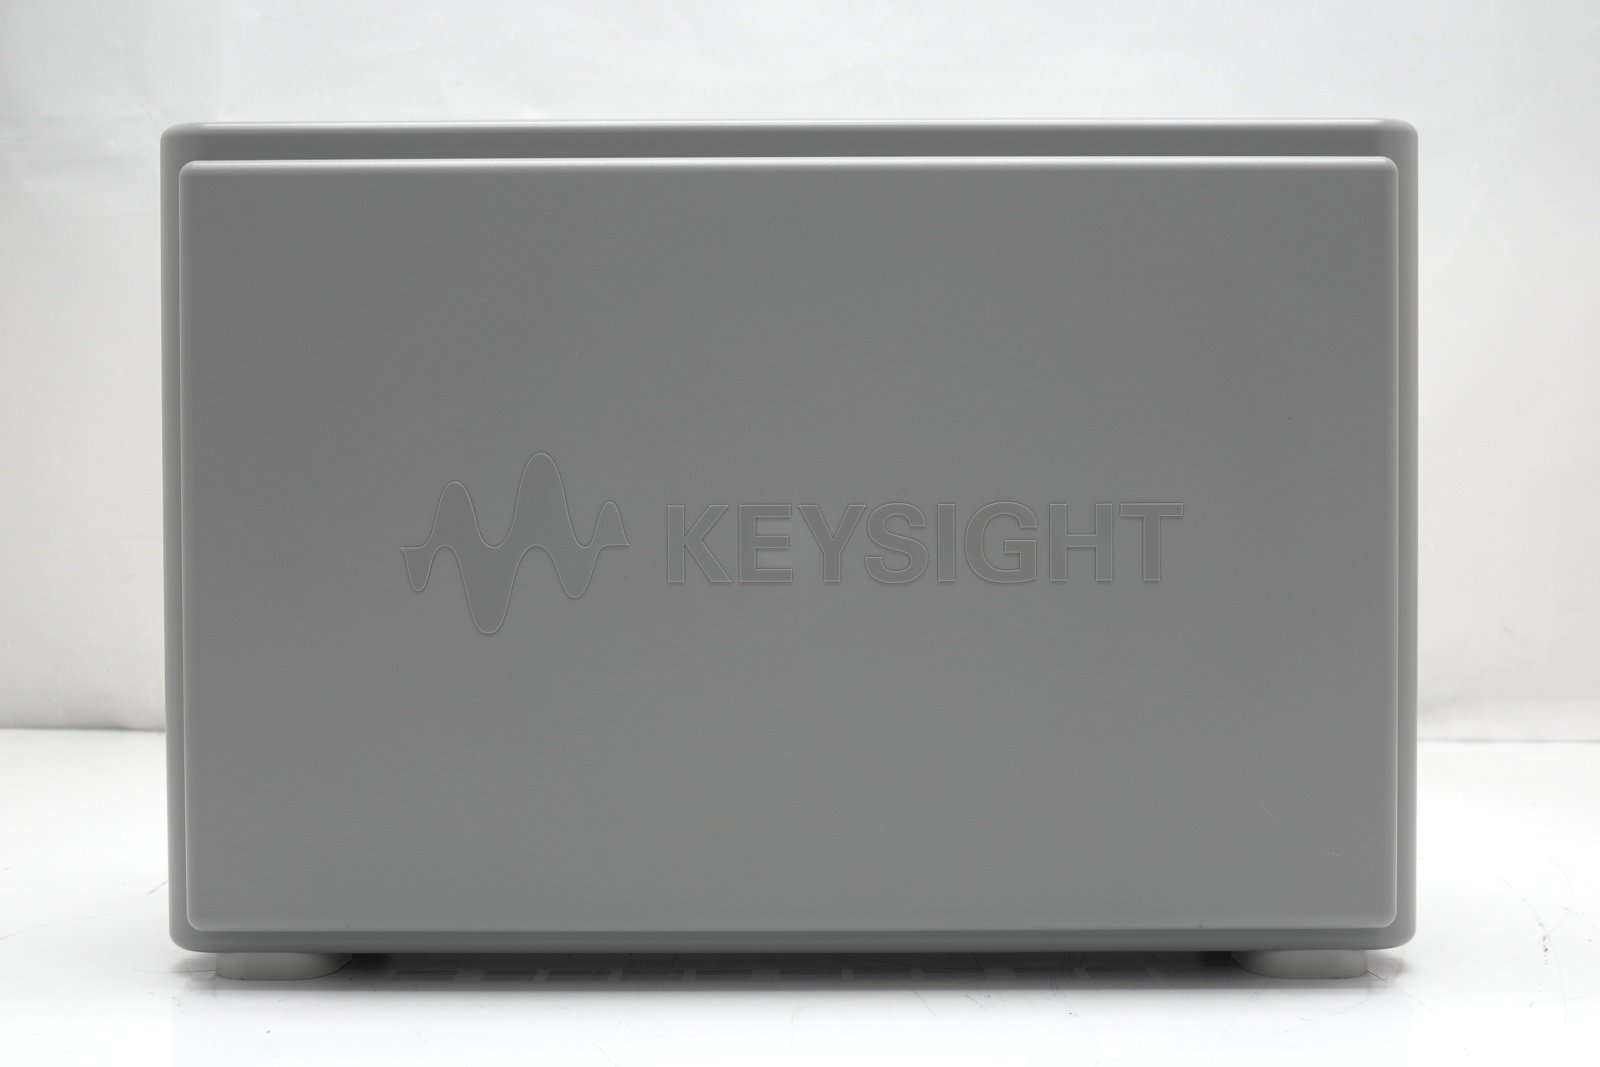 Keysight DSOX6002A Oscilloscope / 1 GHz to 6 GHz / 2 Analog Channels